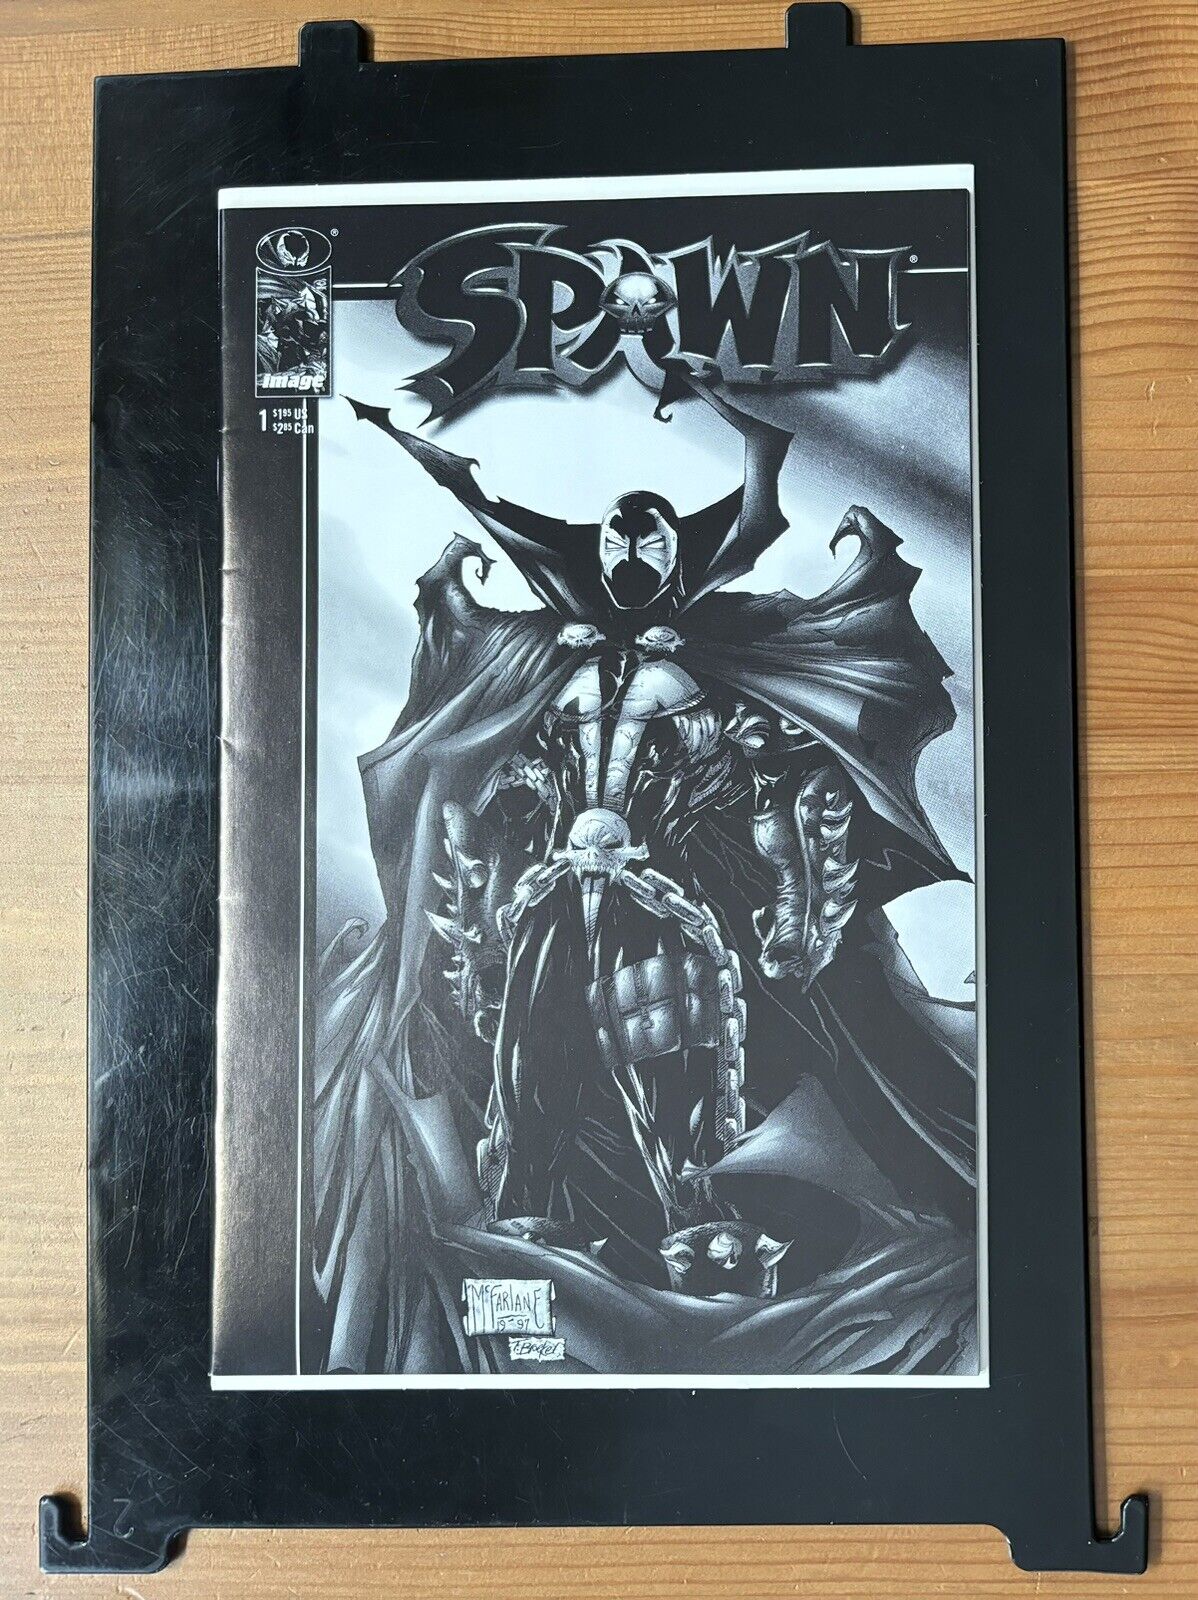 High Grade Spawn #1 1997 1:50 B&W Incentive Edition First Printing - McFarlane